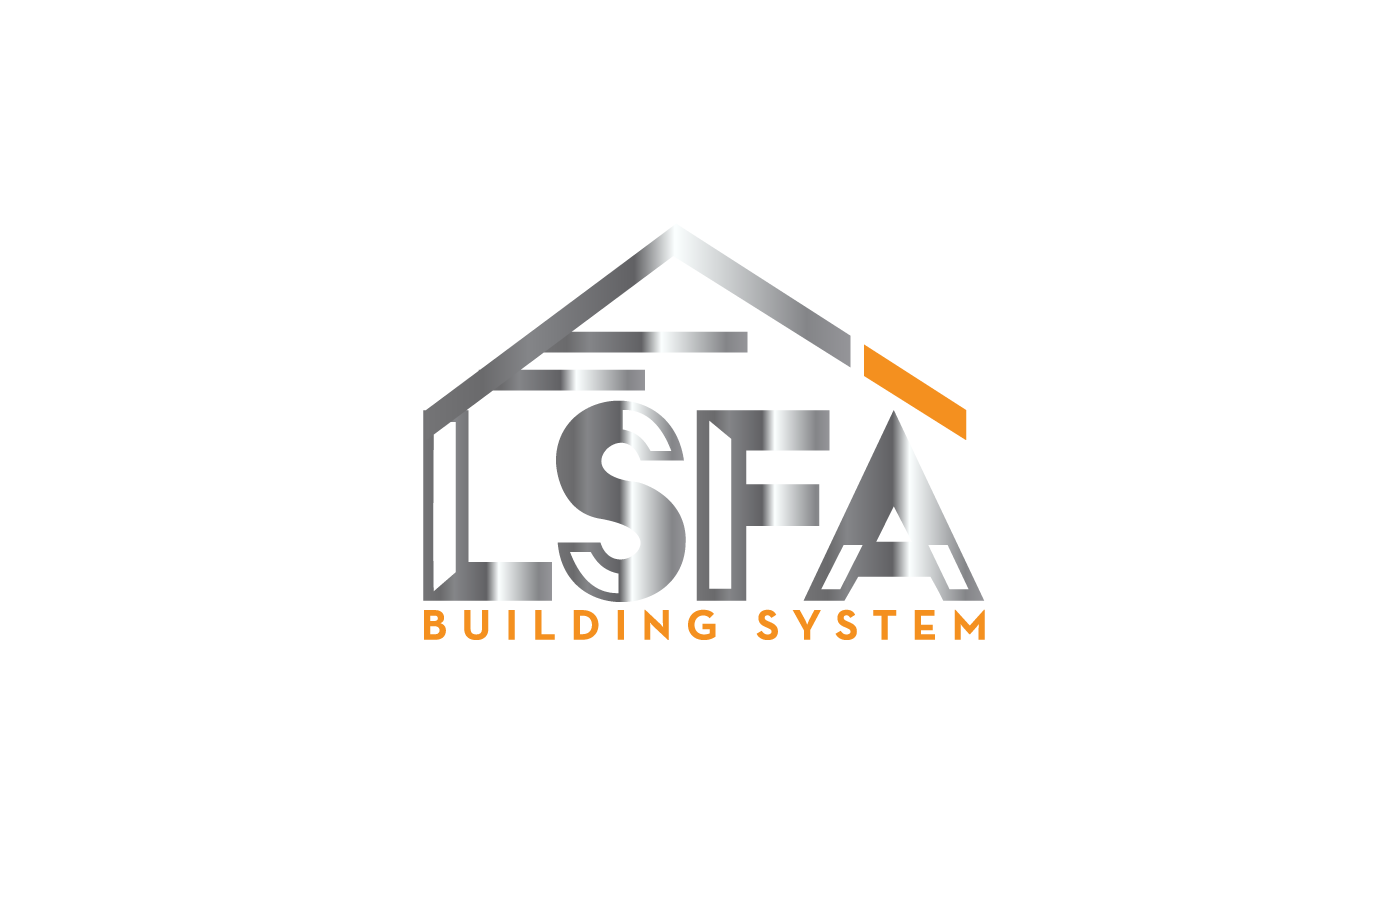 LSFA Building System